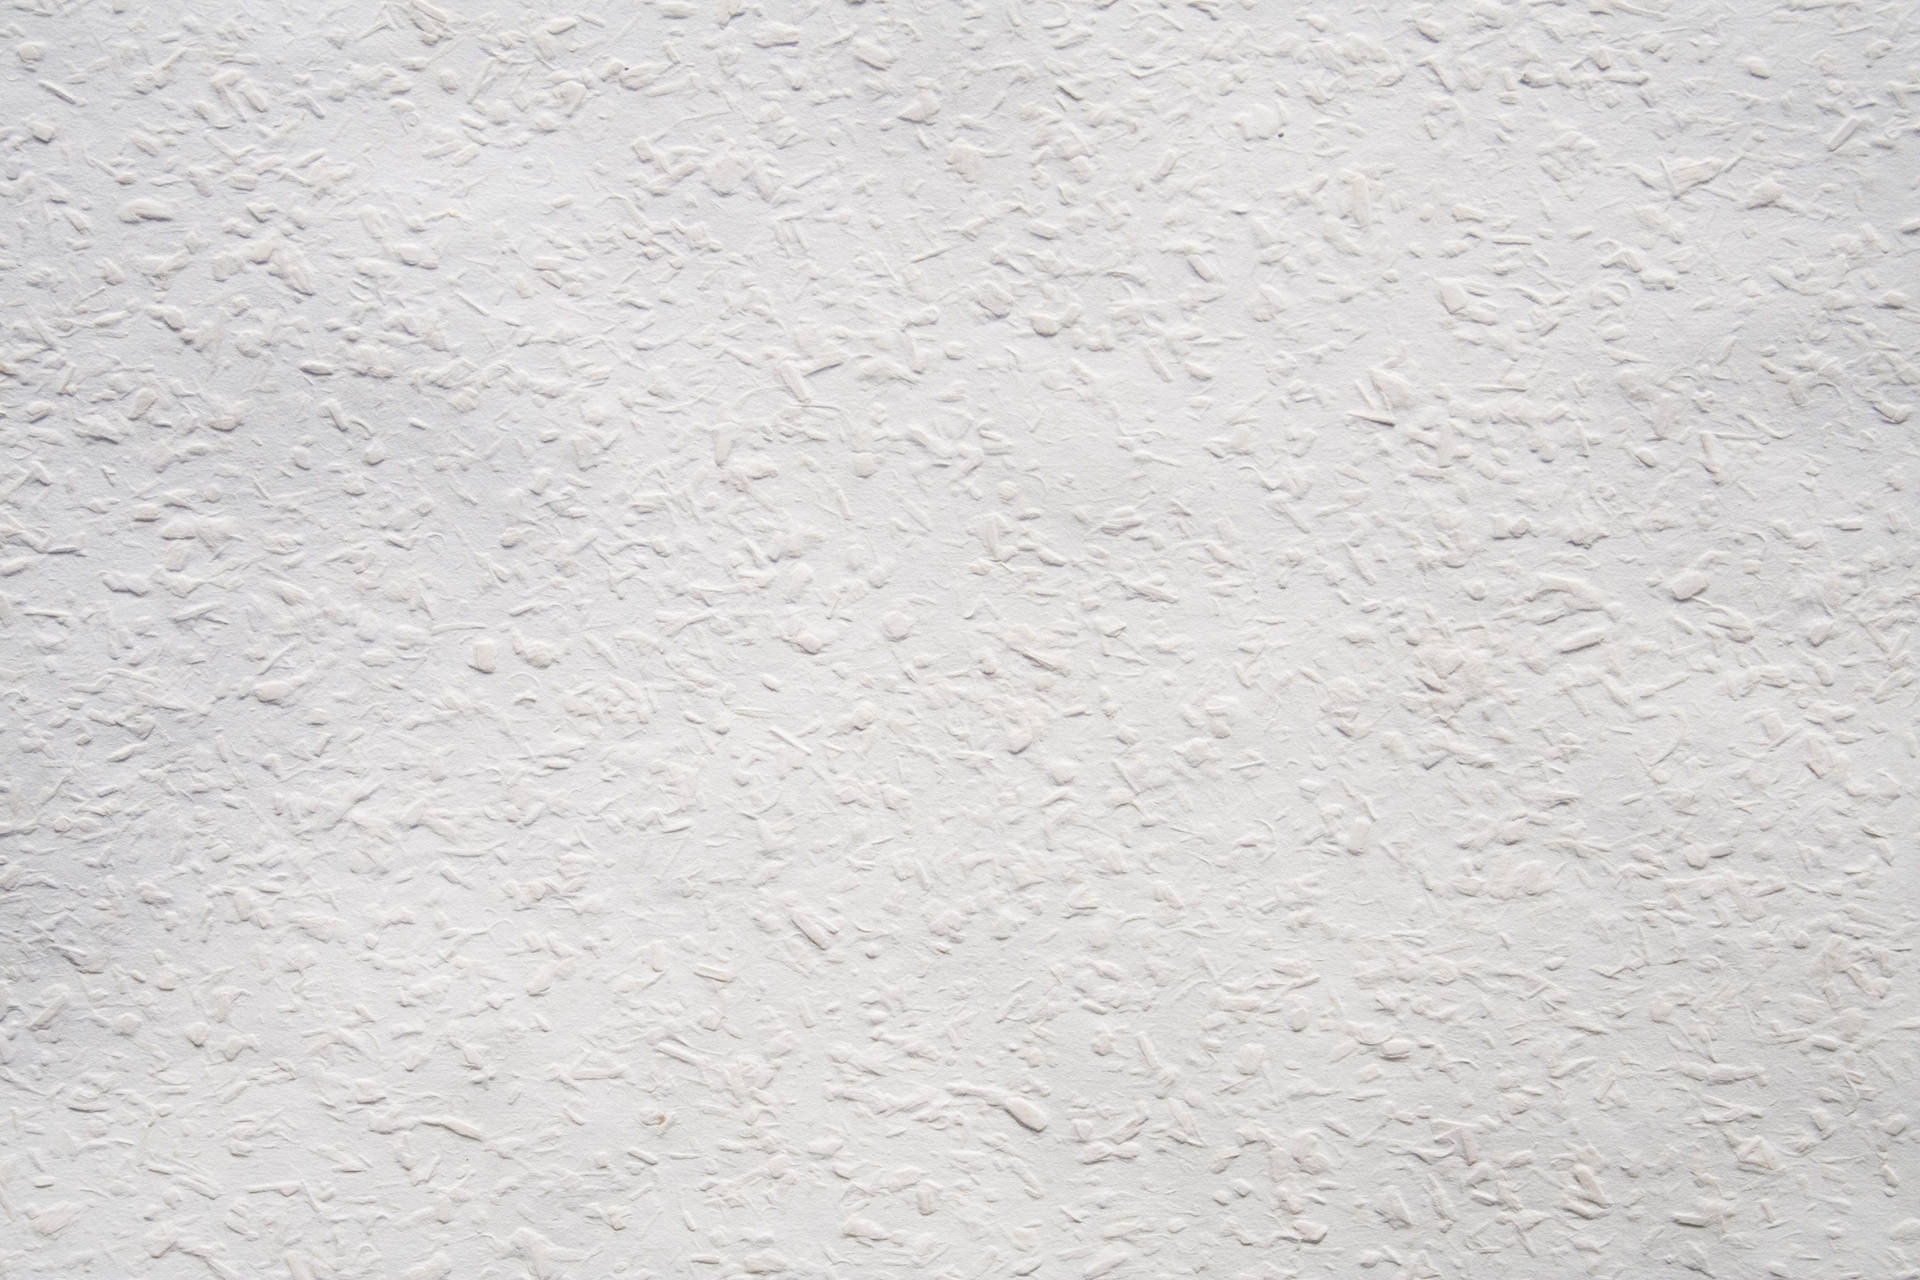 Bumpy White Texture Wallpaper